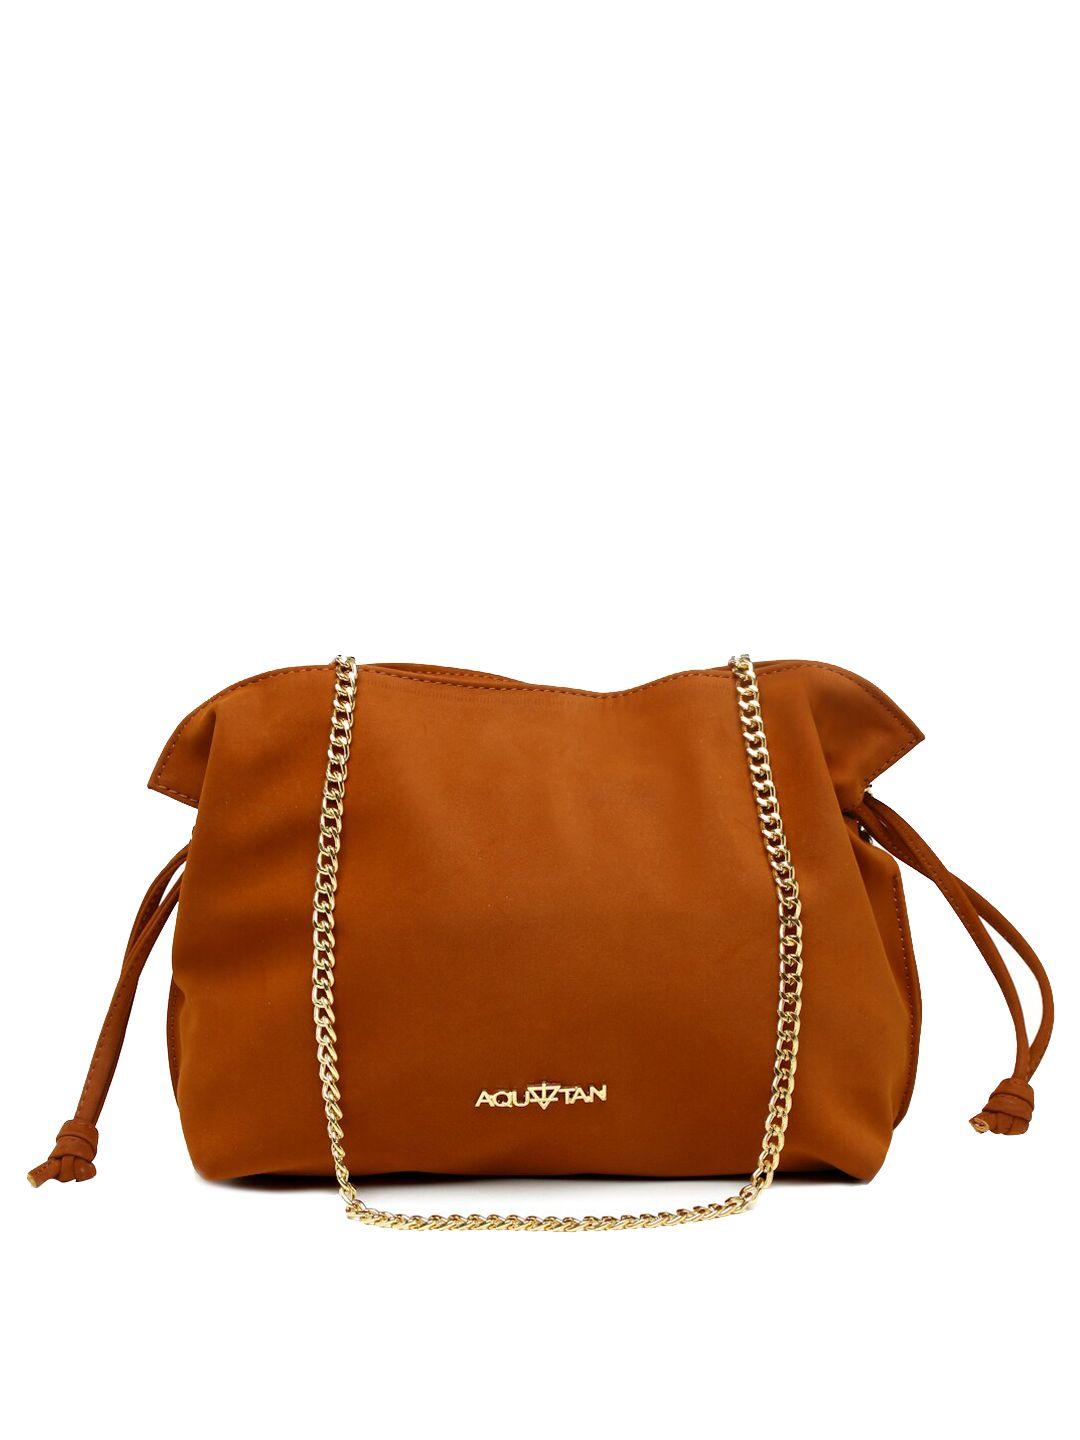 aquatan structured drawstring sling bag